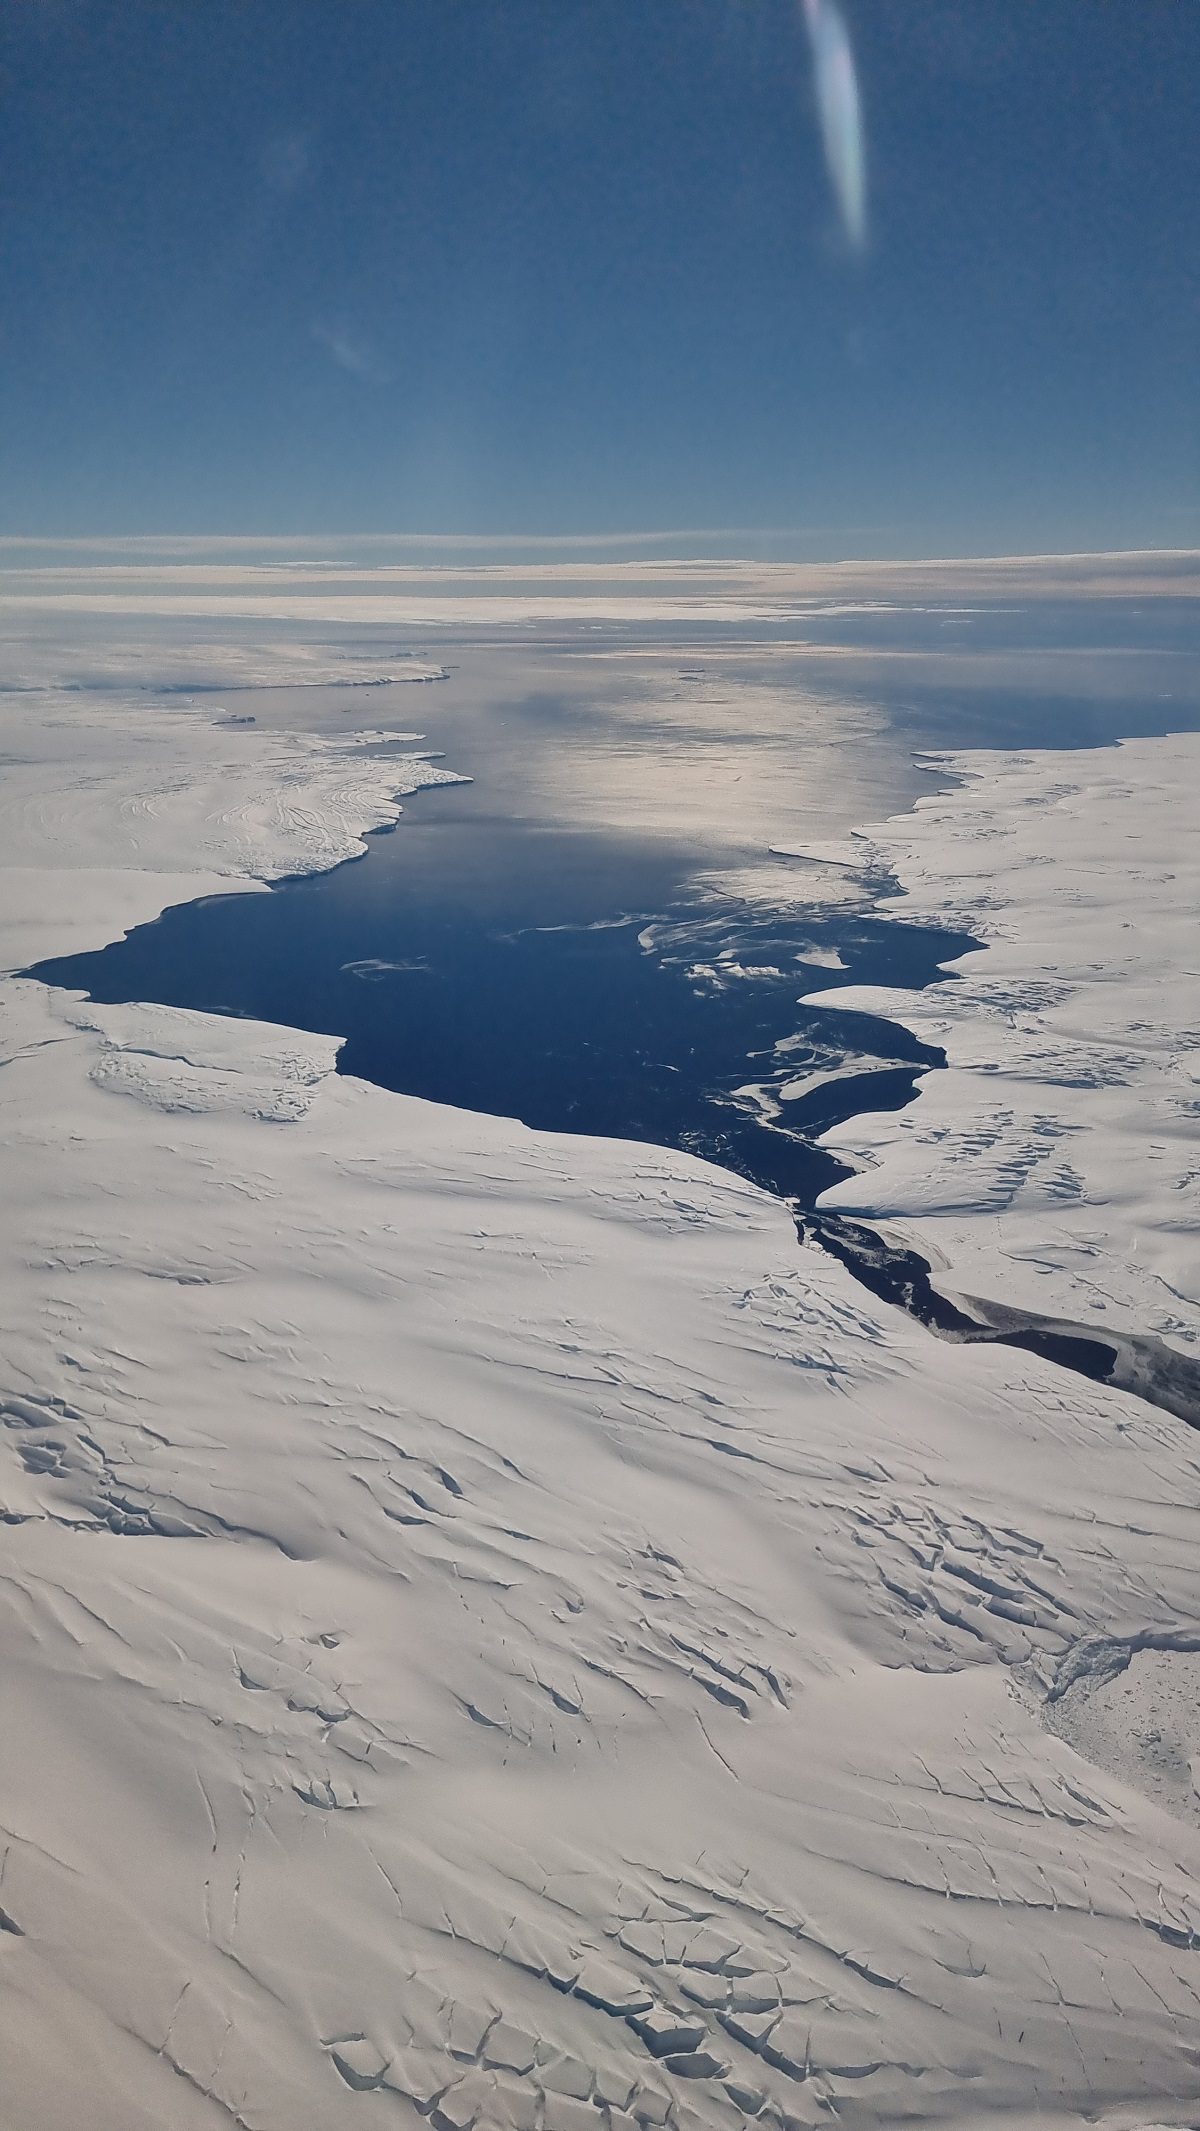 qantas to Antarctica flight review. shows the expansive Antartic coast line